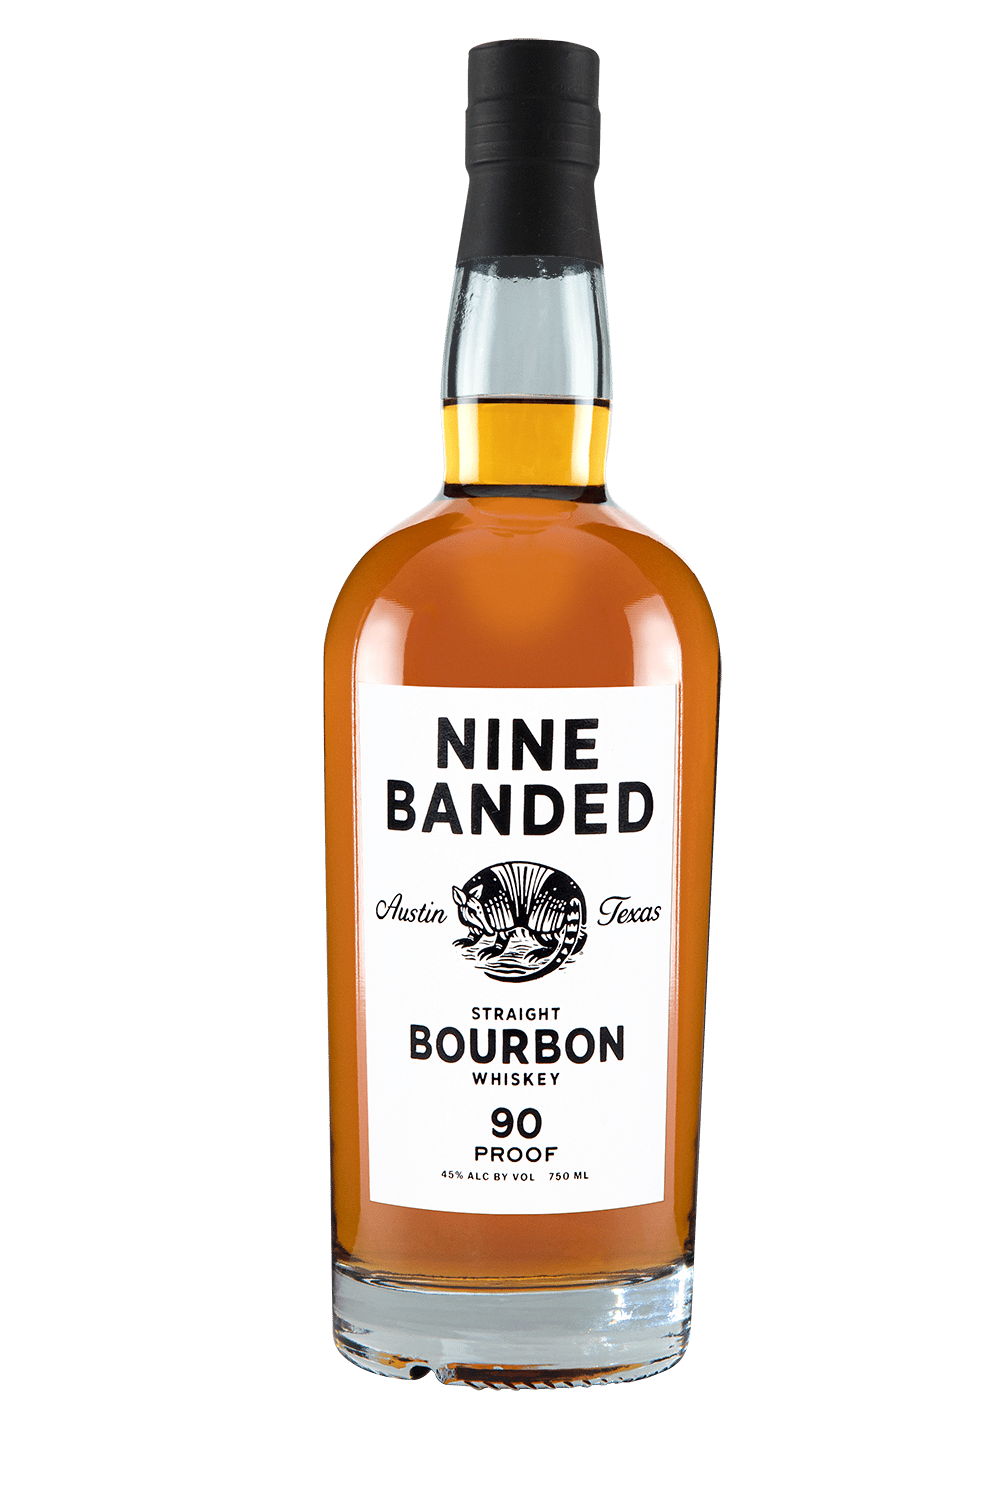 Nine-Banded-Straight-Bourbon